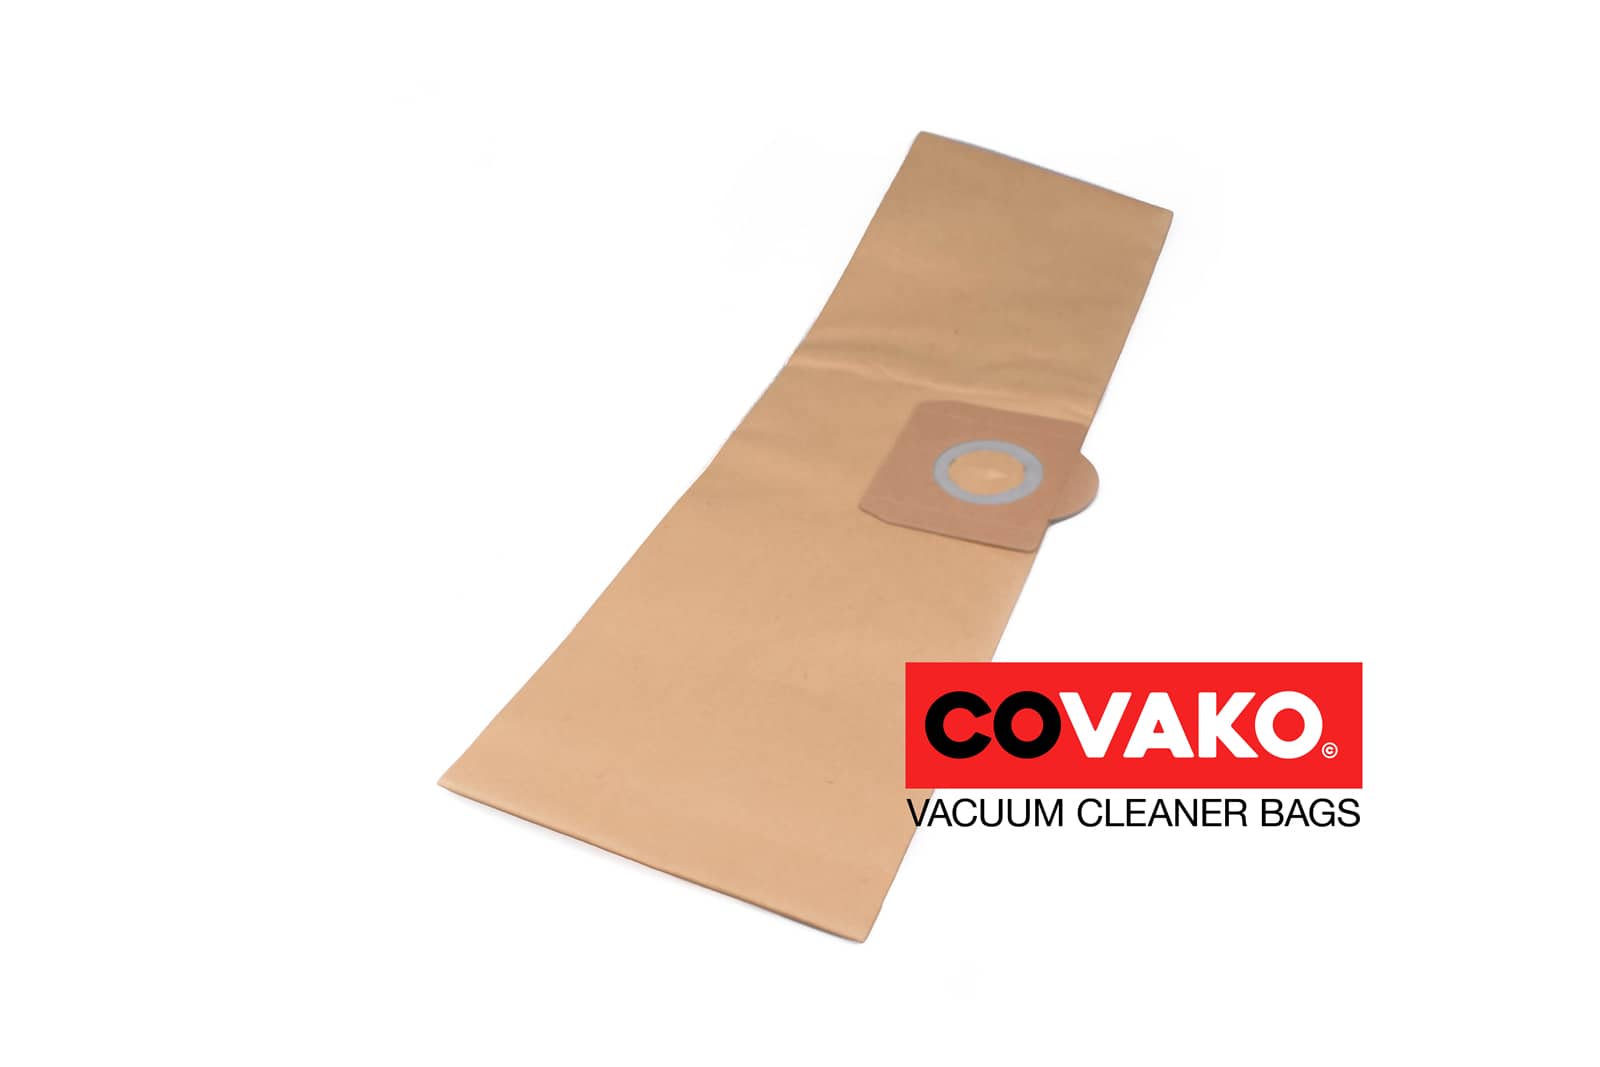 Omega Profi 20 / Paper - Omega vacuum cleaner bags